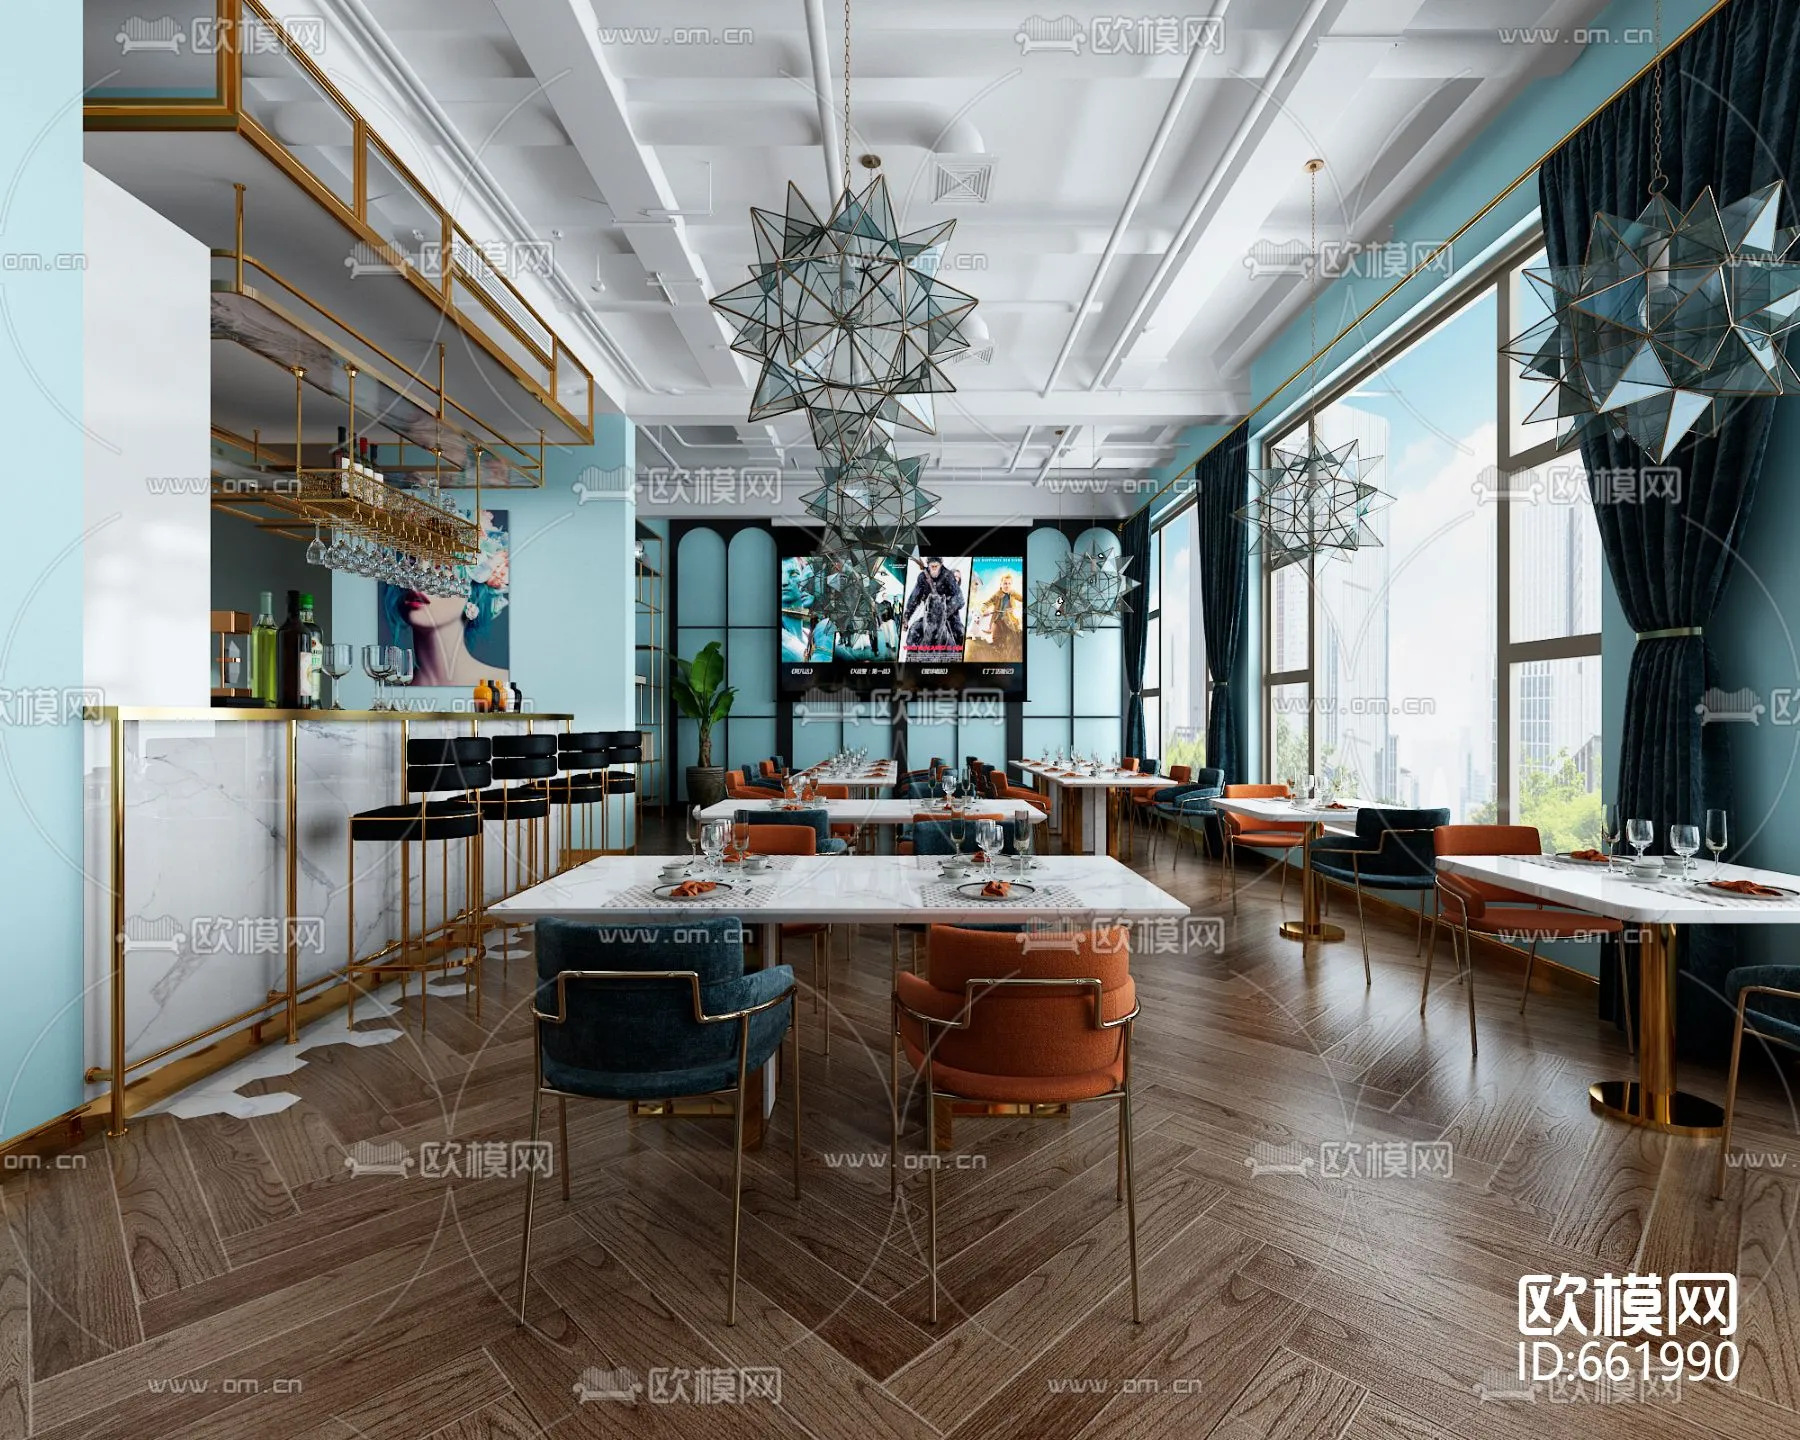 Restaurant 3D Scenes – 0711